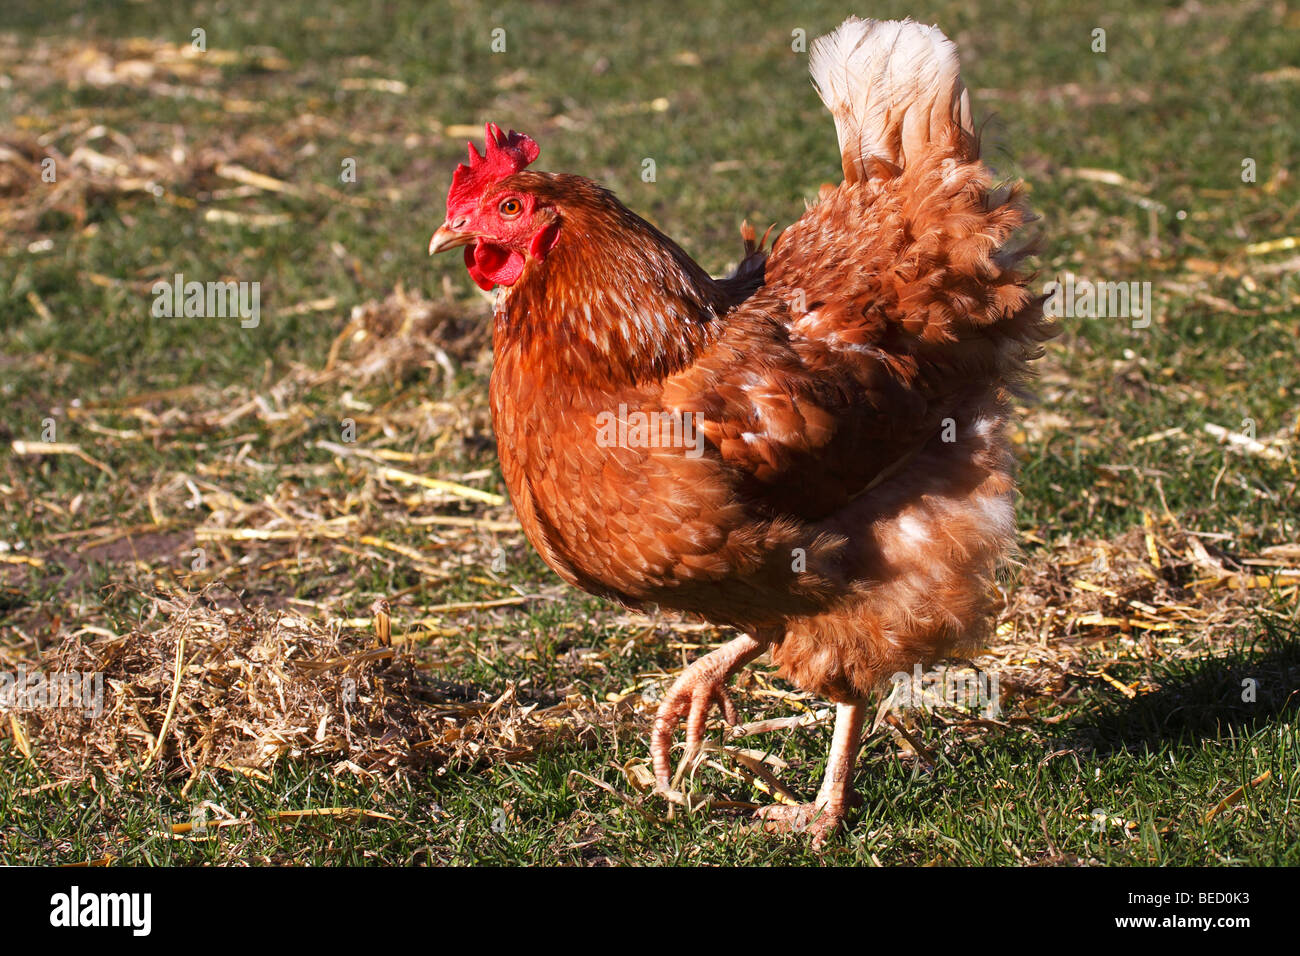 Barn pintade, poule, poulet, (Gallus gallus domesticus), free-range Banque D'Images